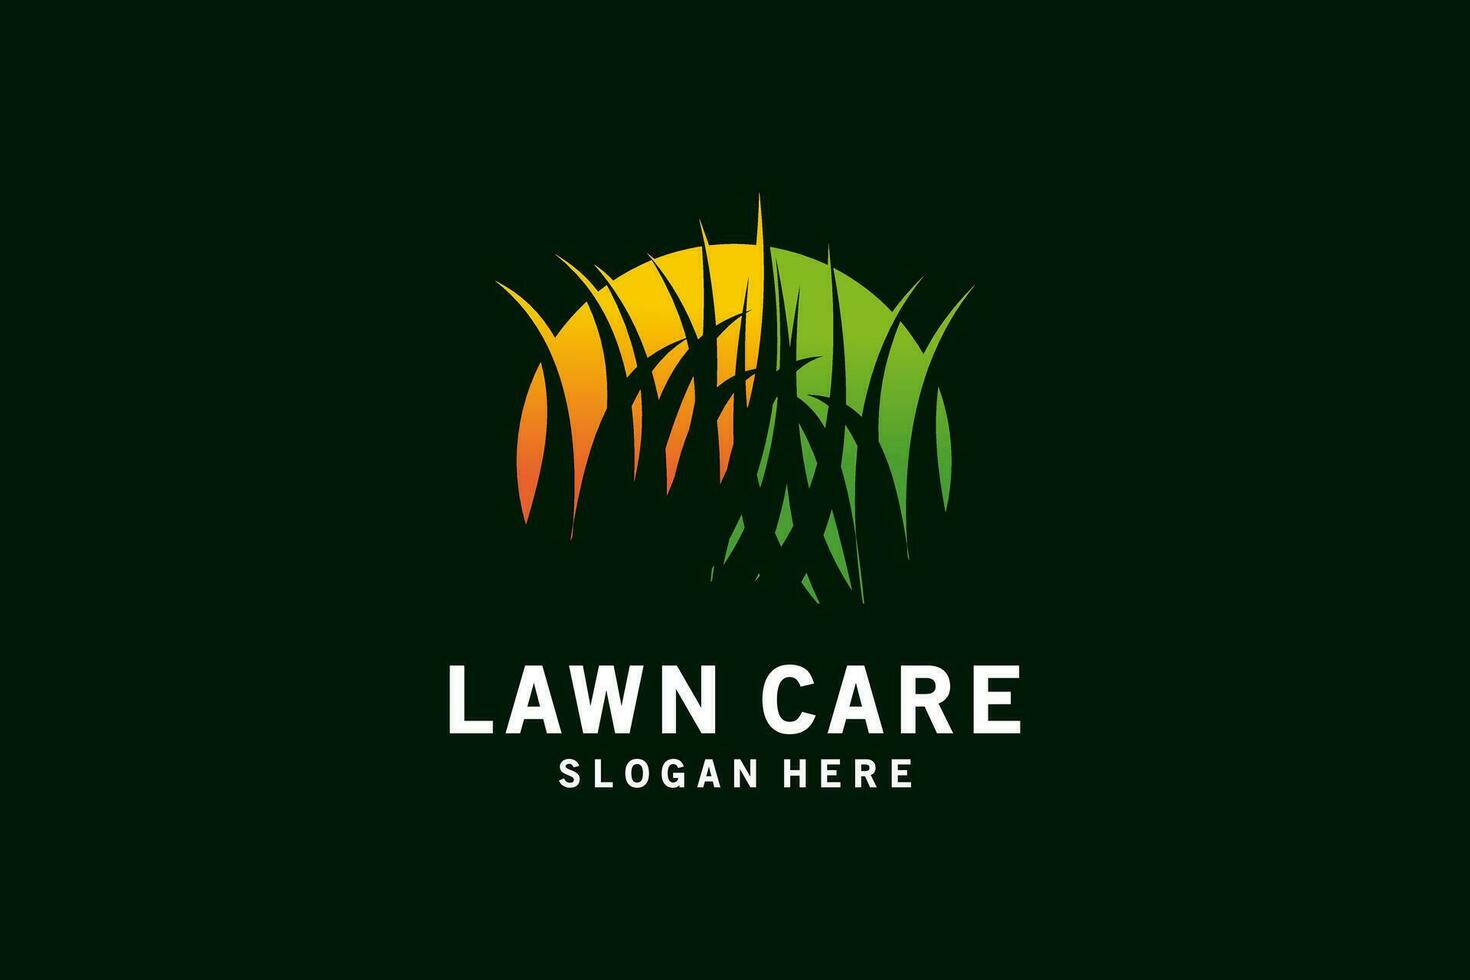 Lawn care logo design, abstract grass logo vector illustration